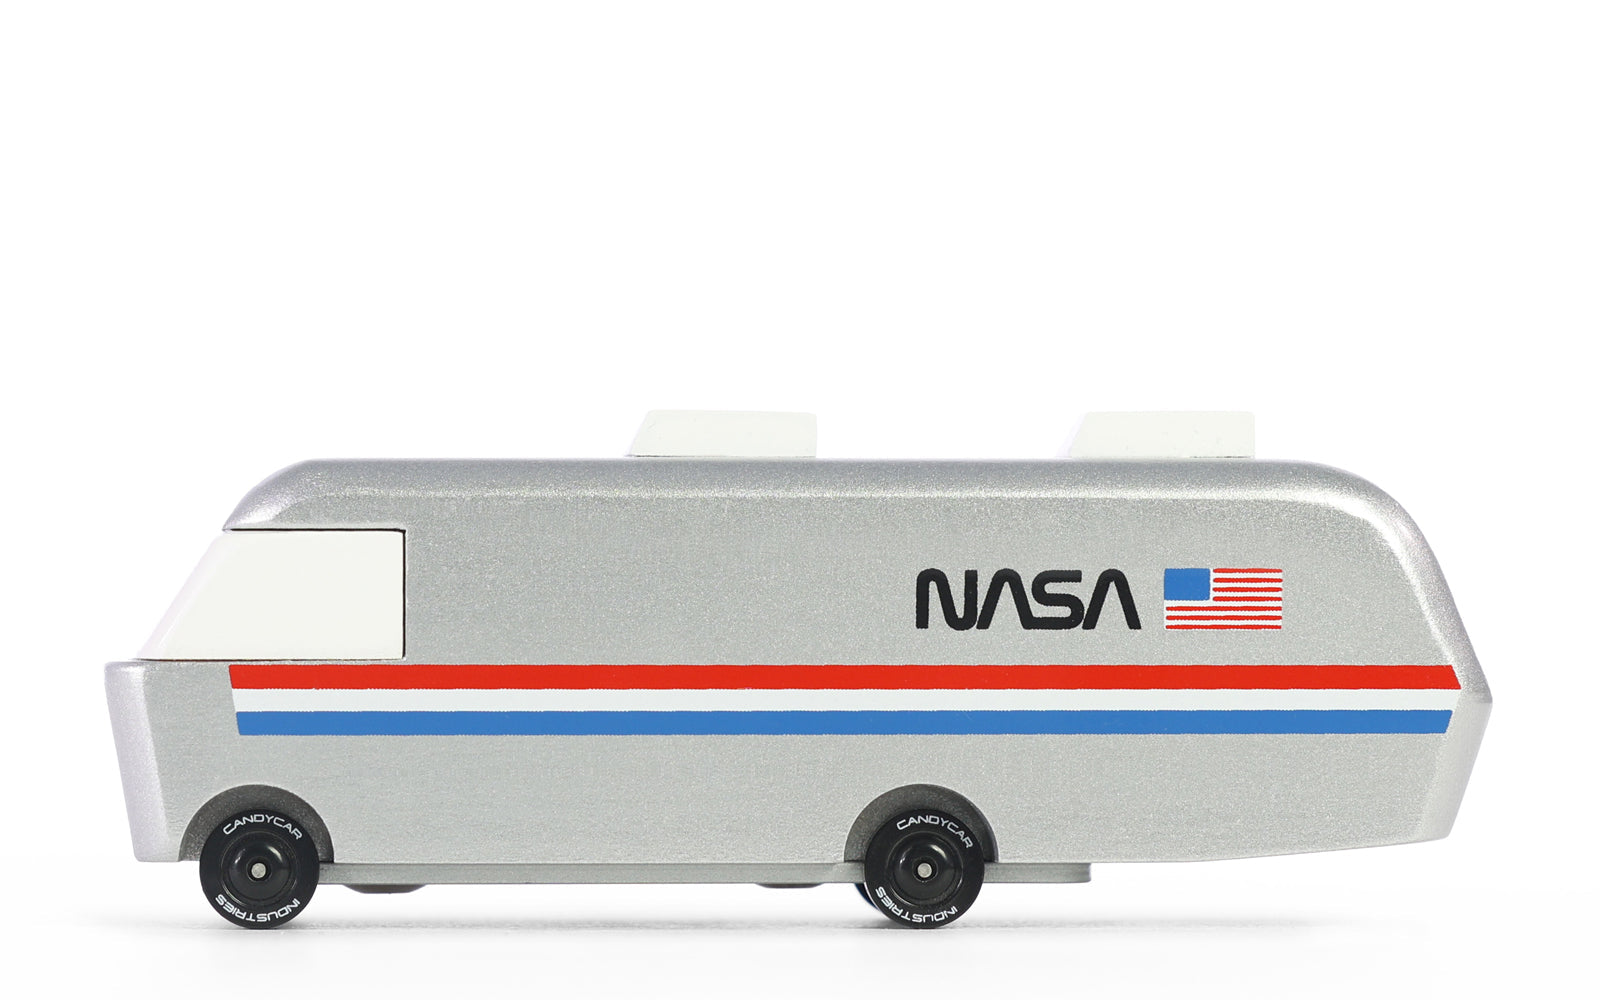 NASA Astrovan - Where The Sidewalk Ends Toy Shop